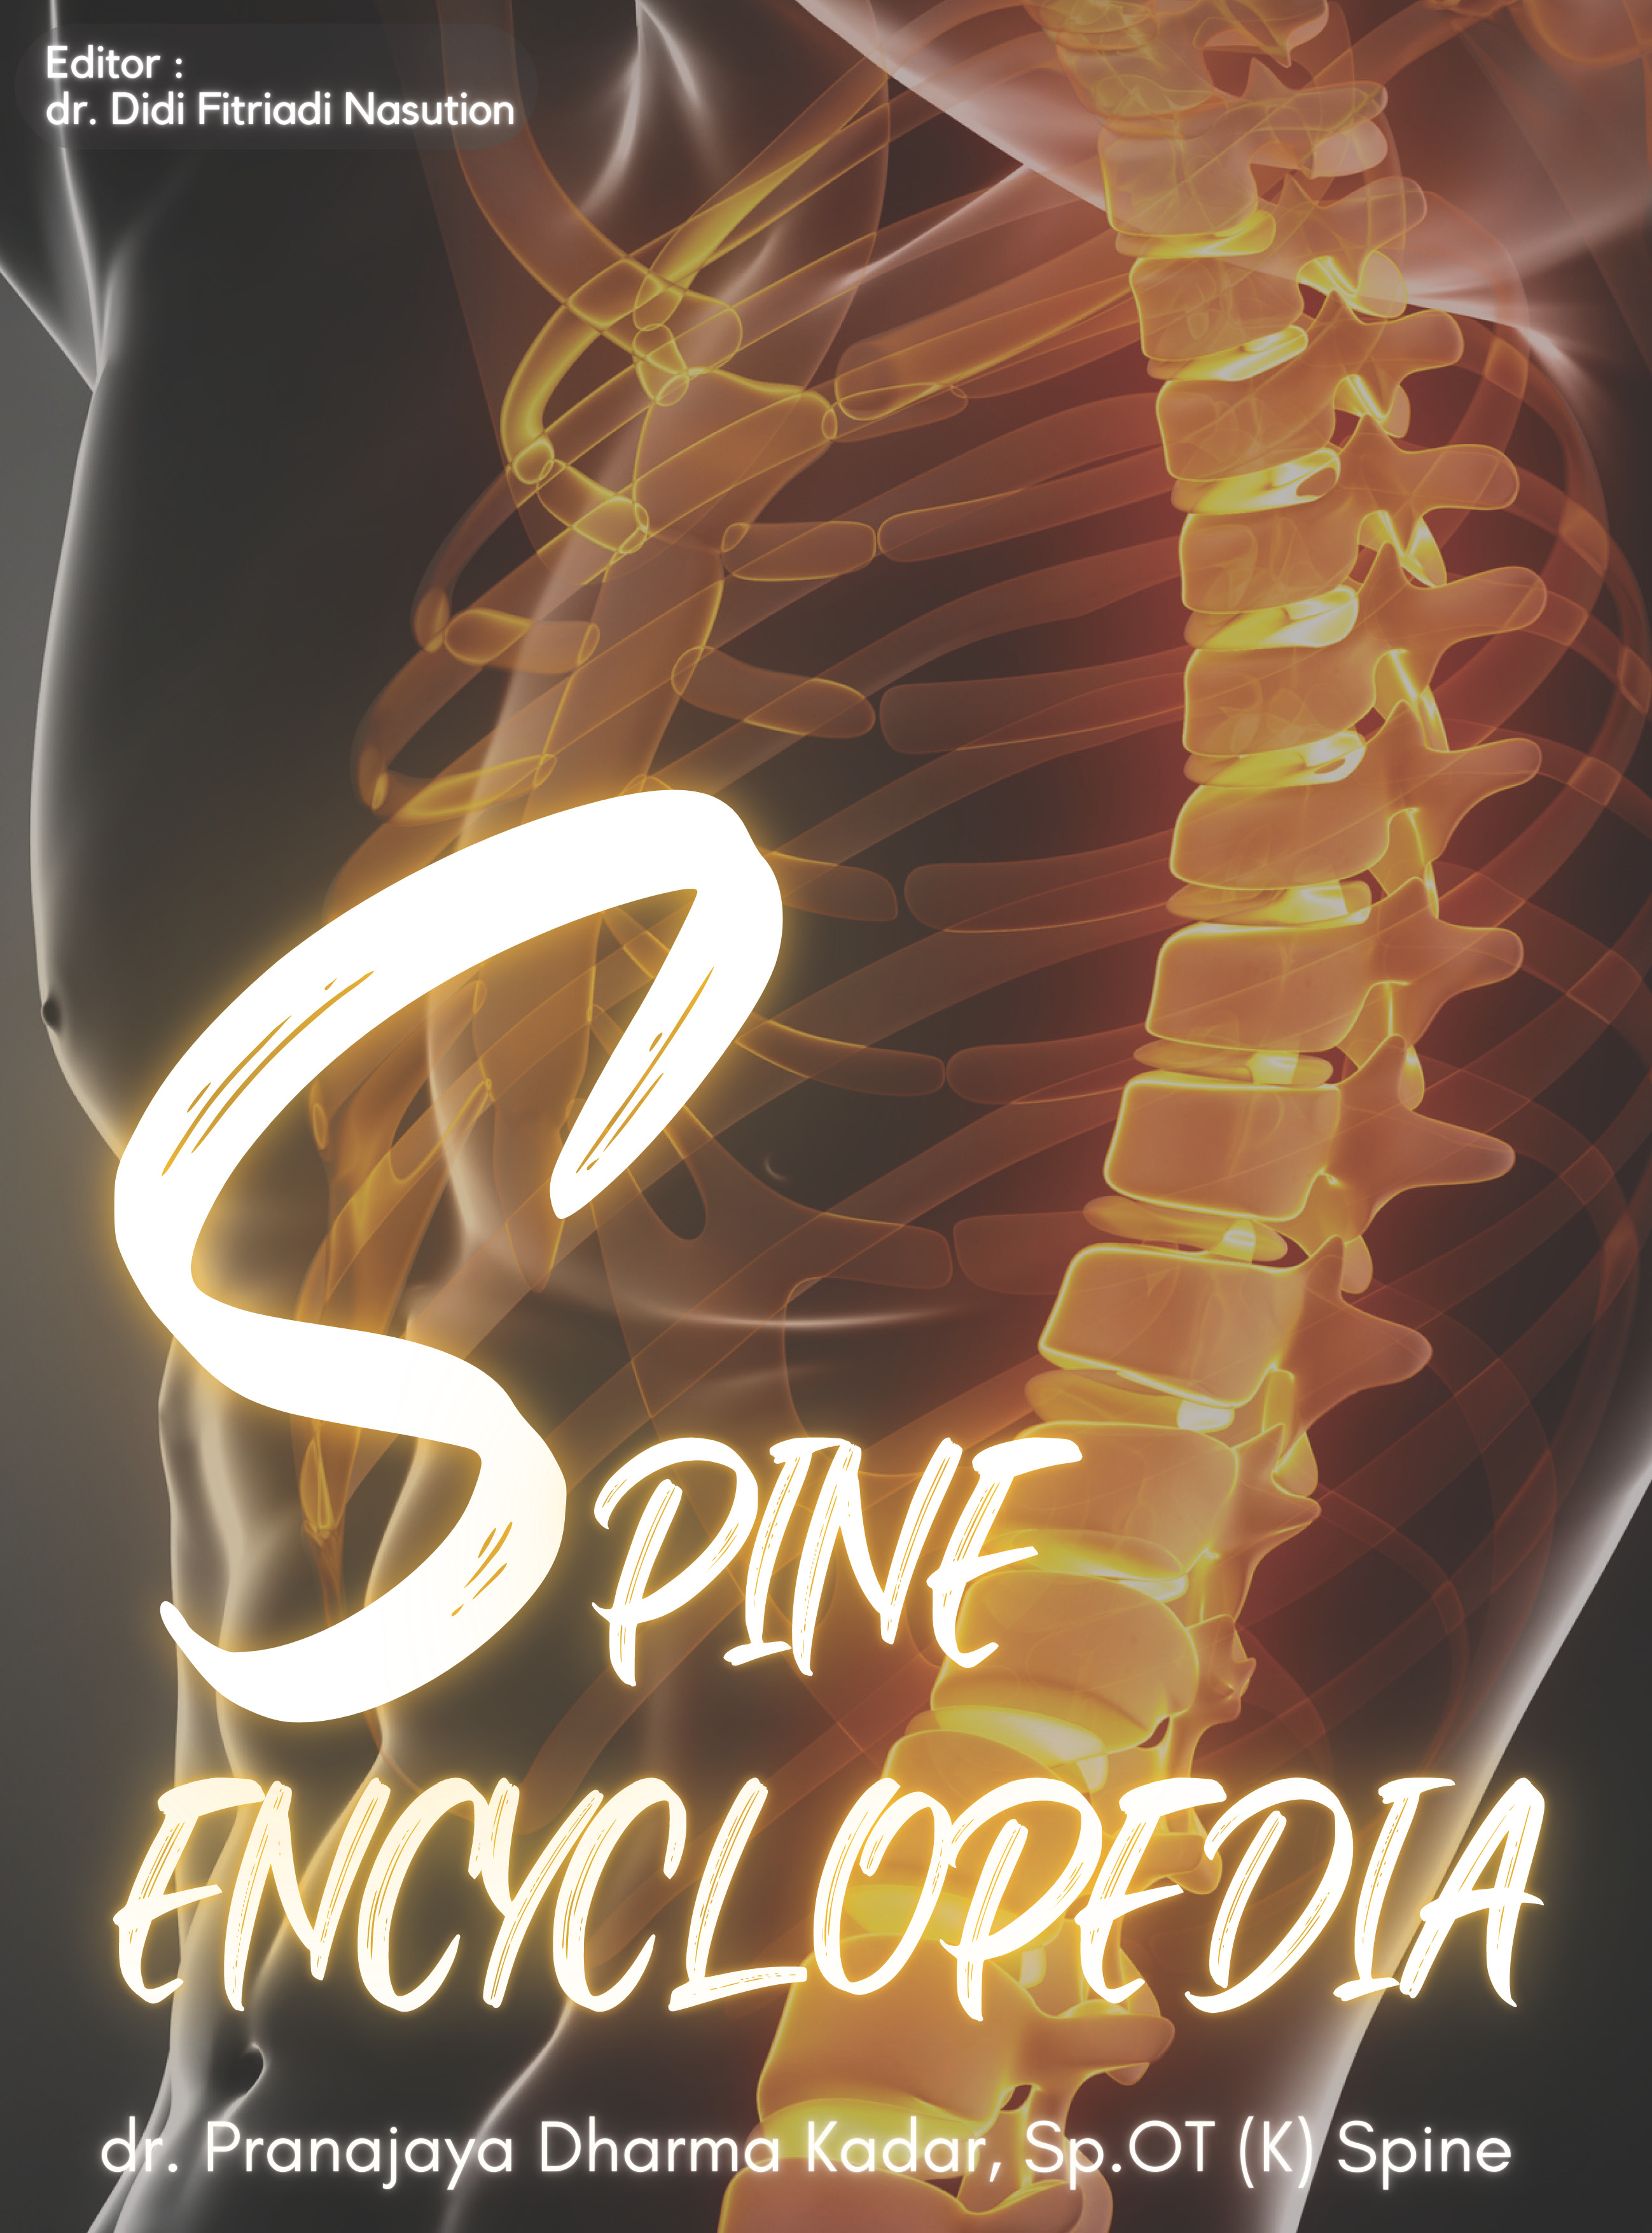 Spine Encyclopedia